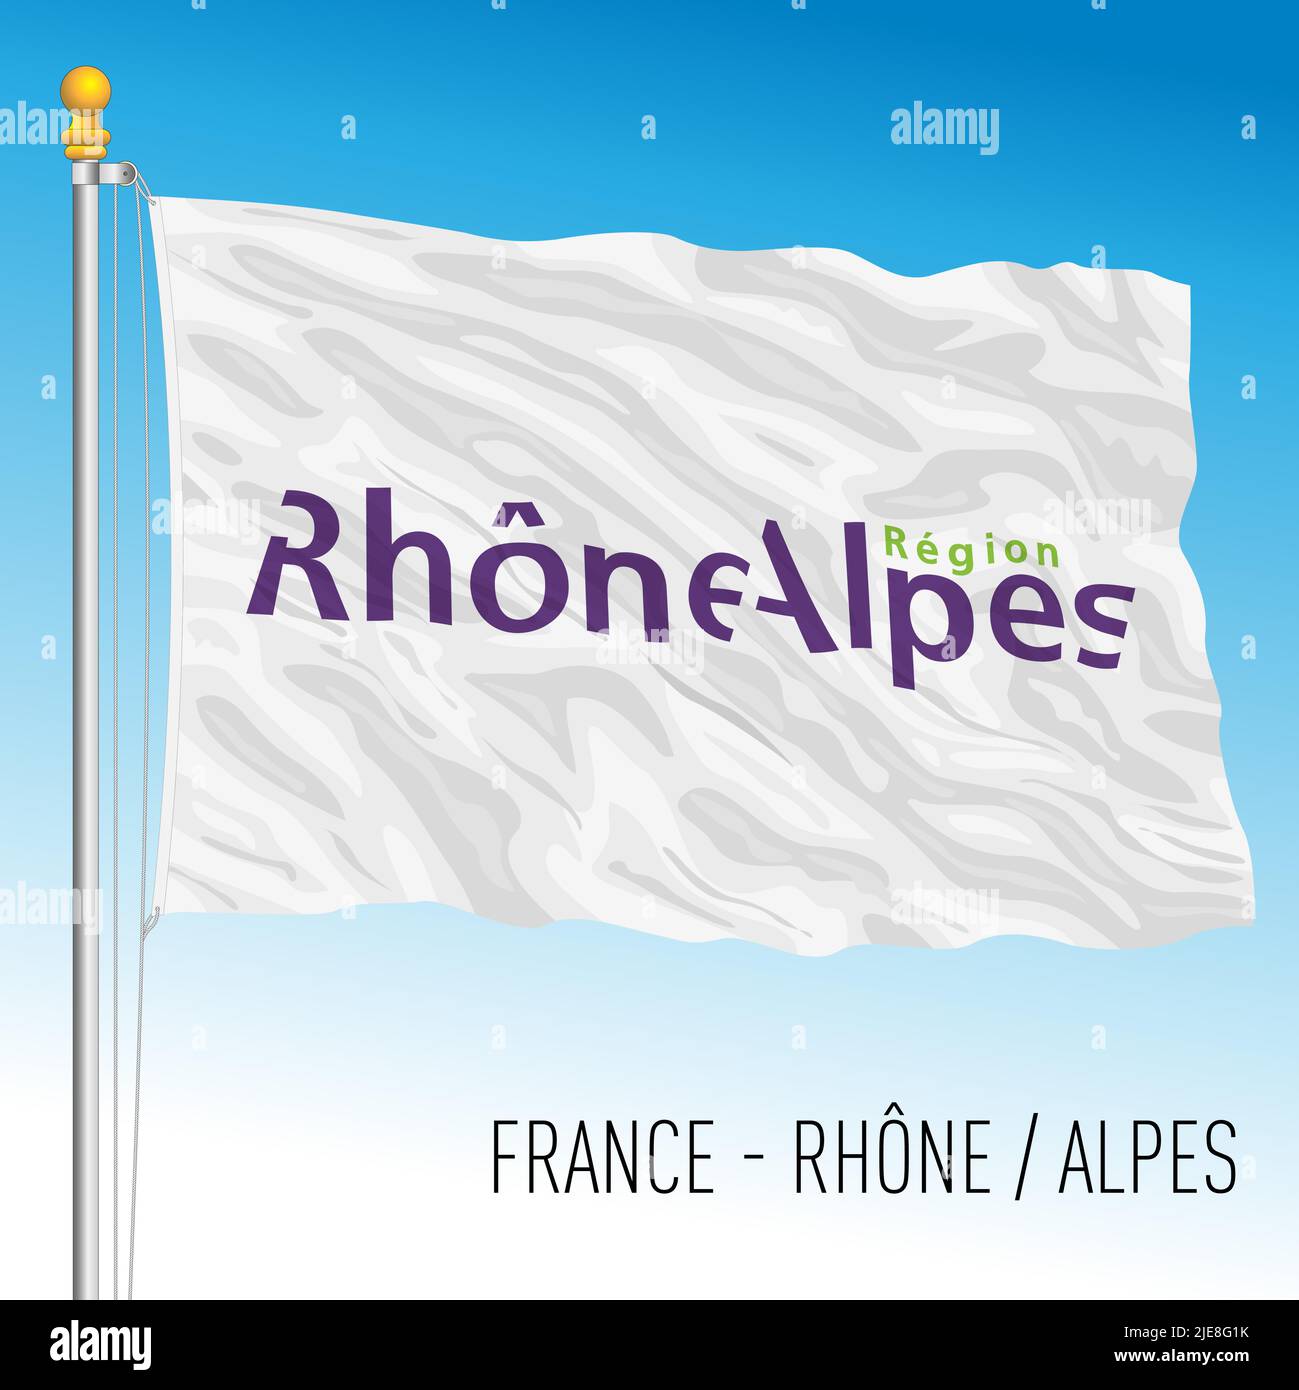 Auvergne Rhone Alpes regional flag, France, European Union, vector illustration Stock Vector